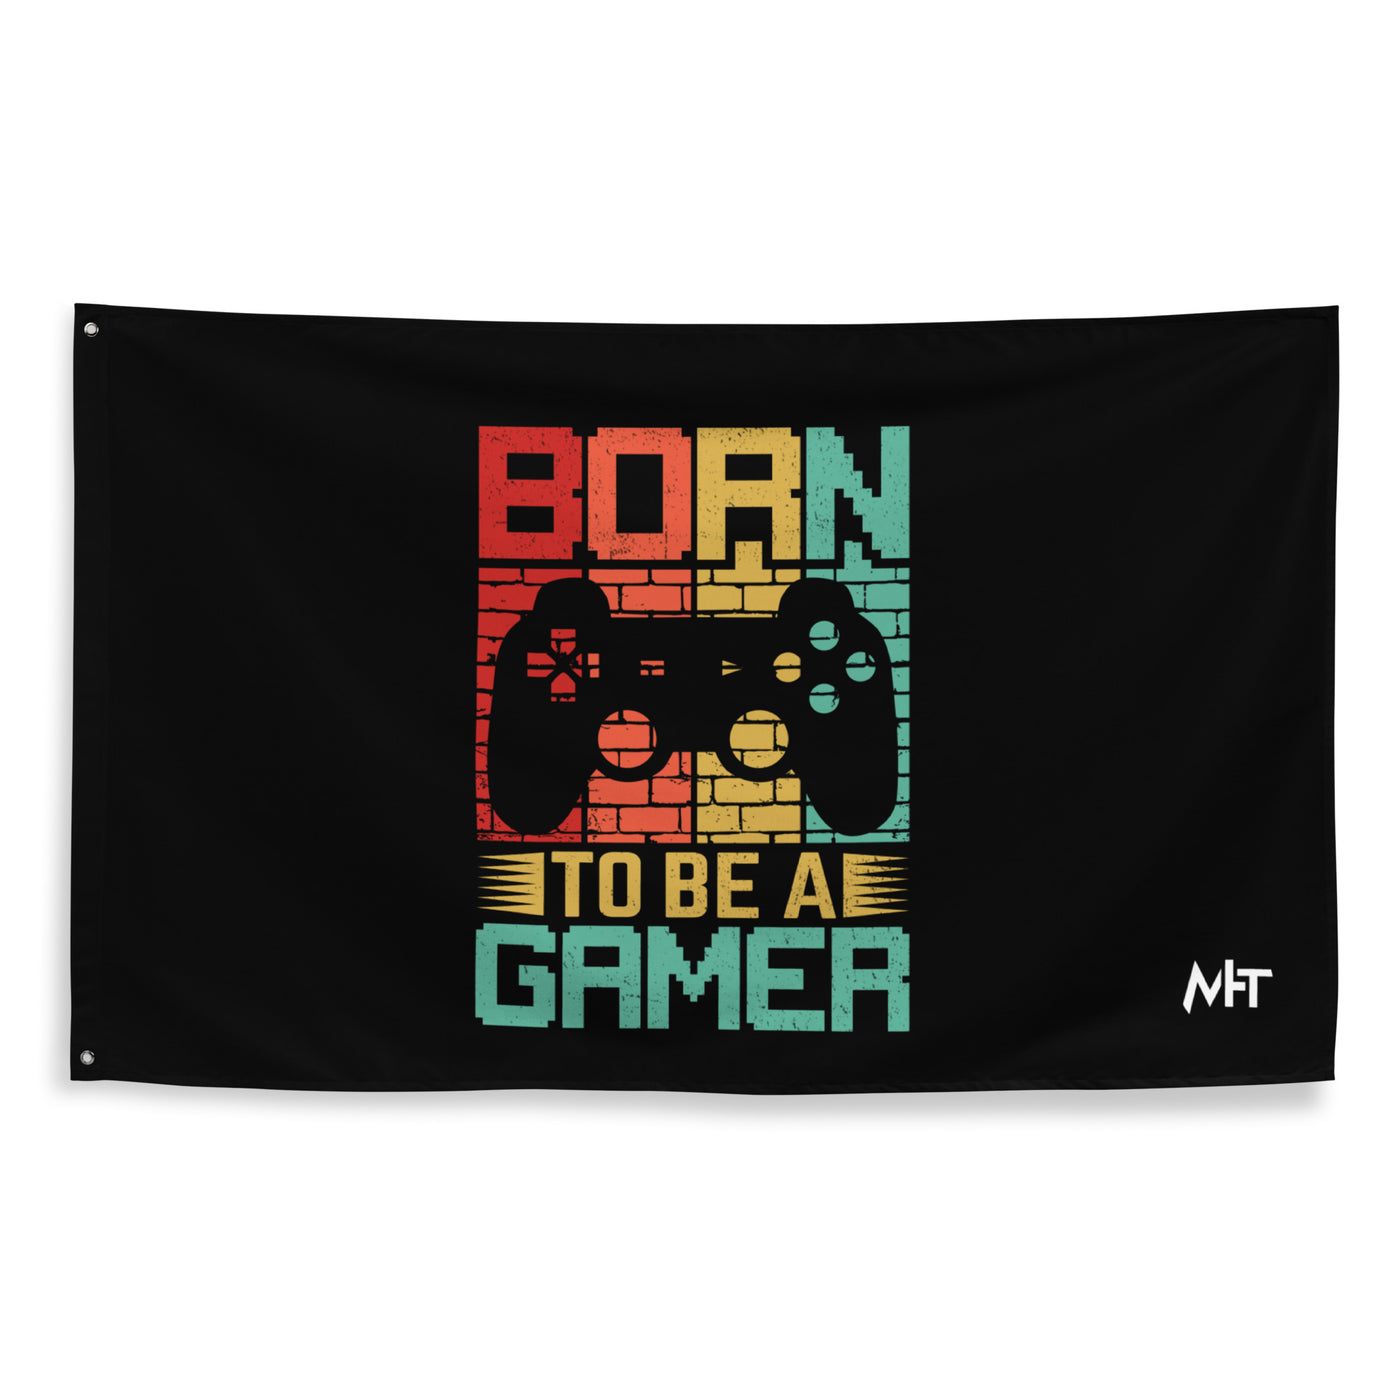 Born to Be a Gamer - Shagor Flag